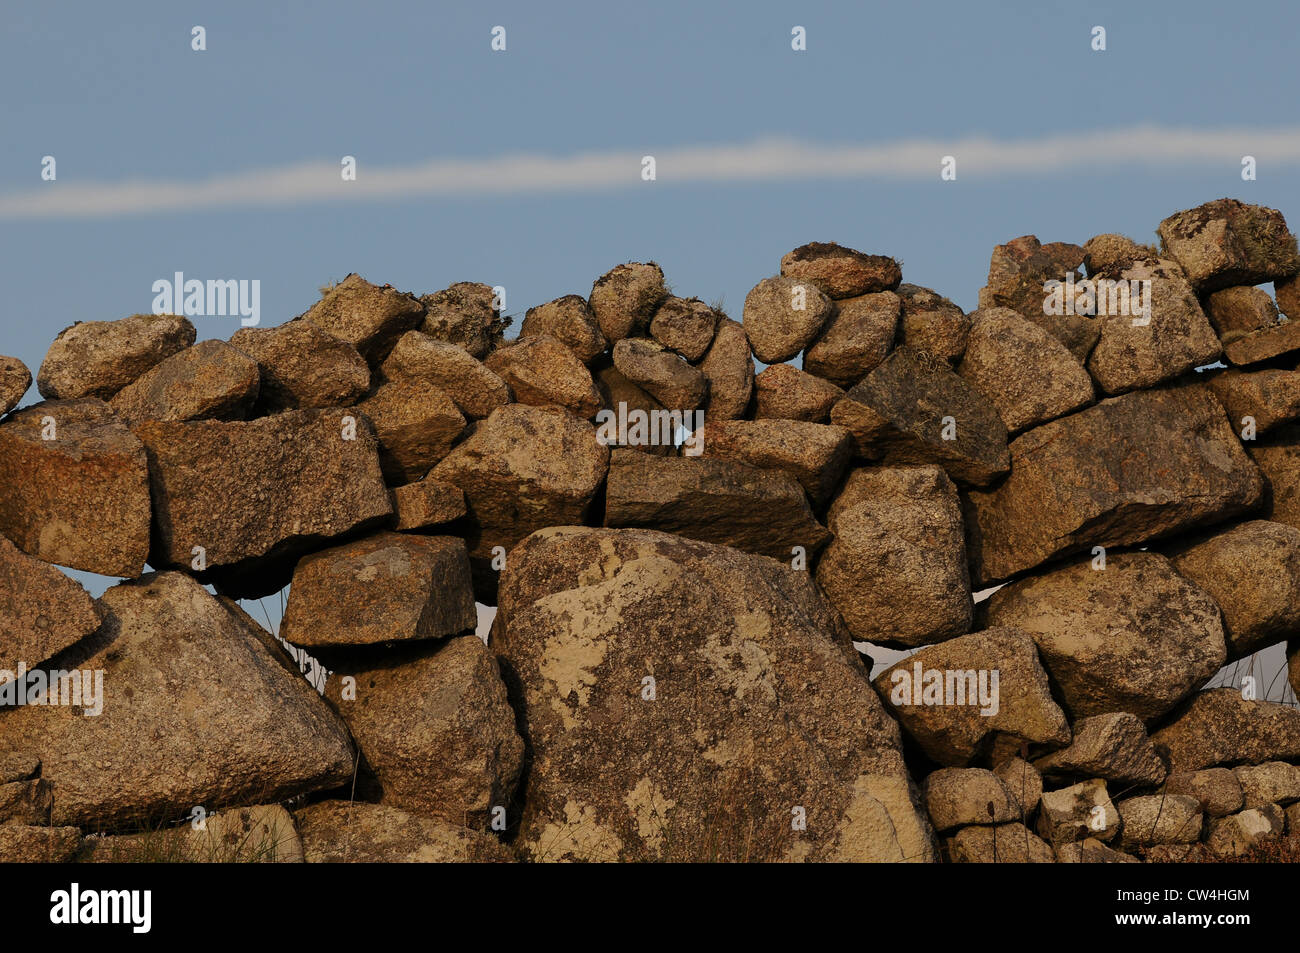 Dry stone walls, stone walls mark land boundaries and help keep livestock in one place, Carraroe, Conamara, Galway, Ireland Stock Photo